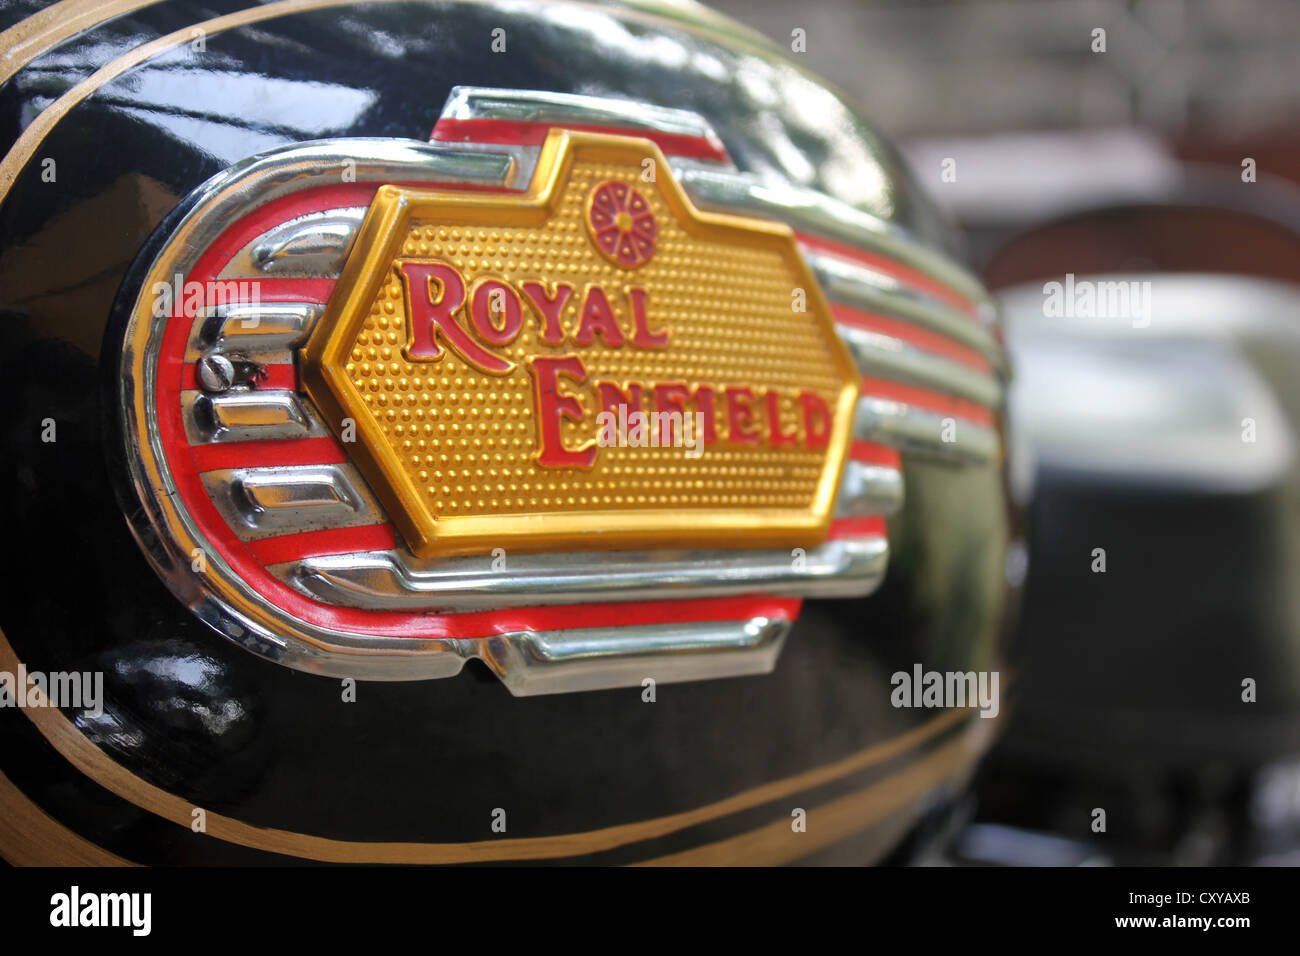 La moto de la semaine : Royal Enfield Diesel